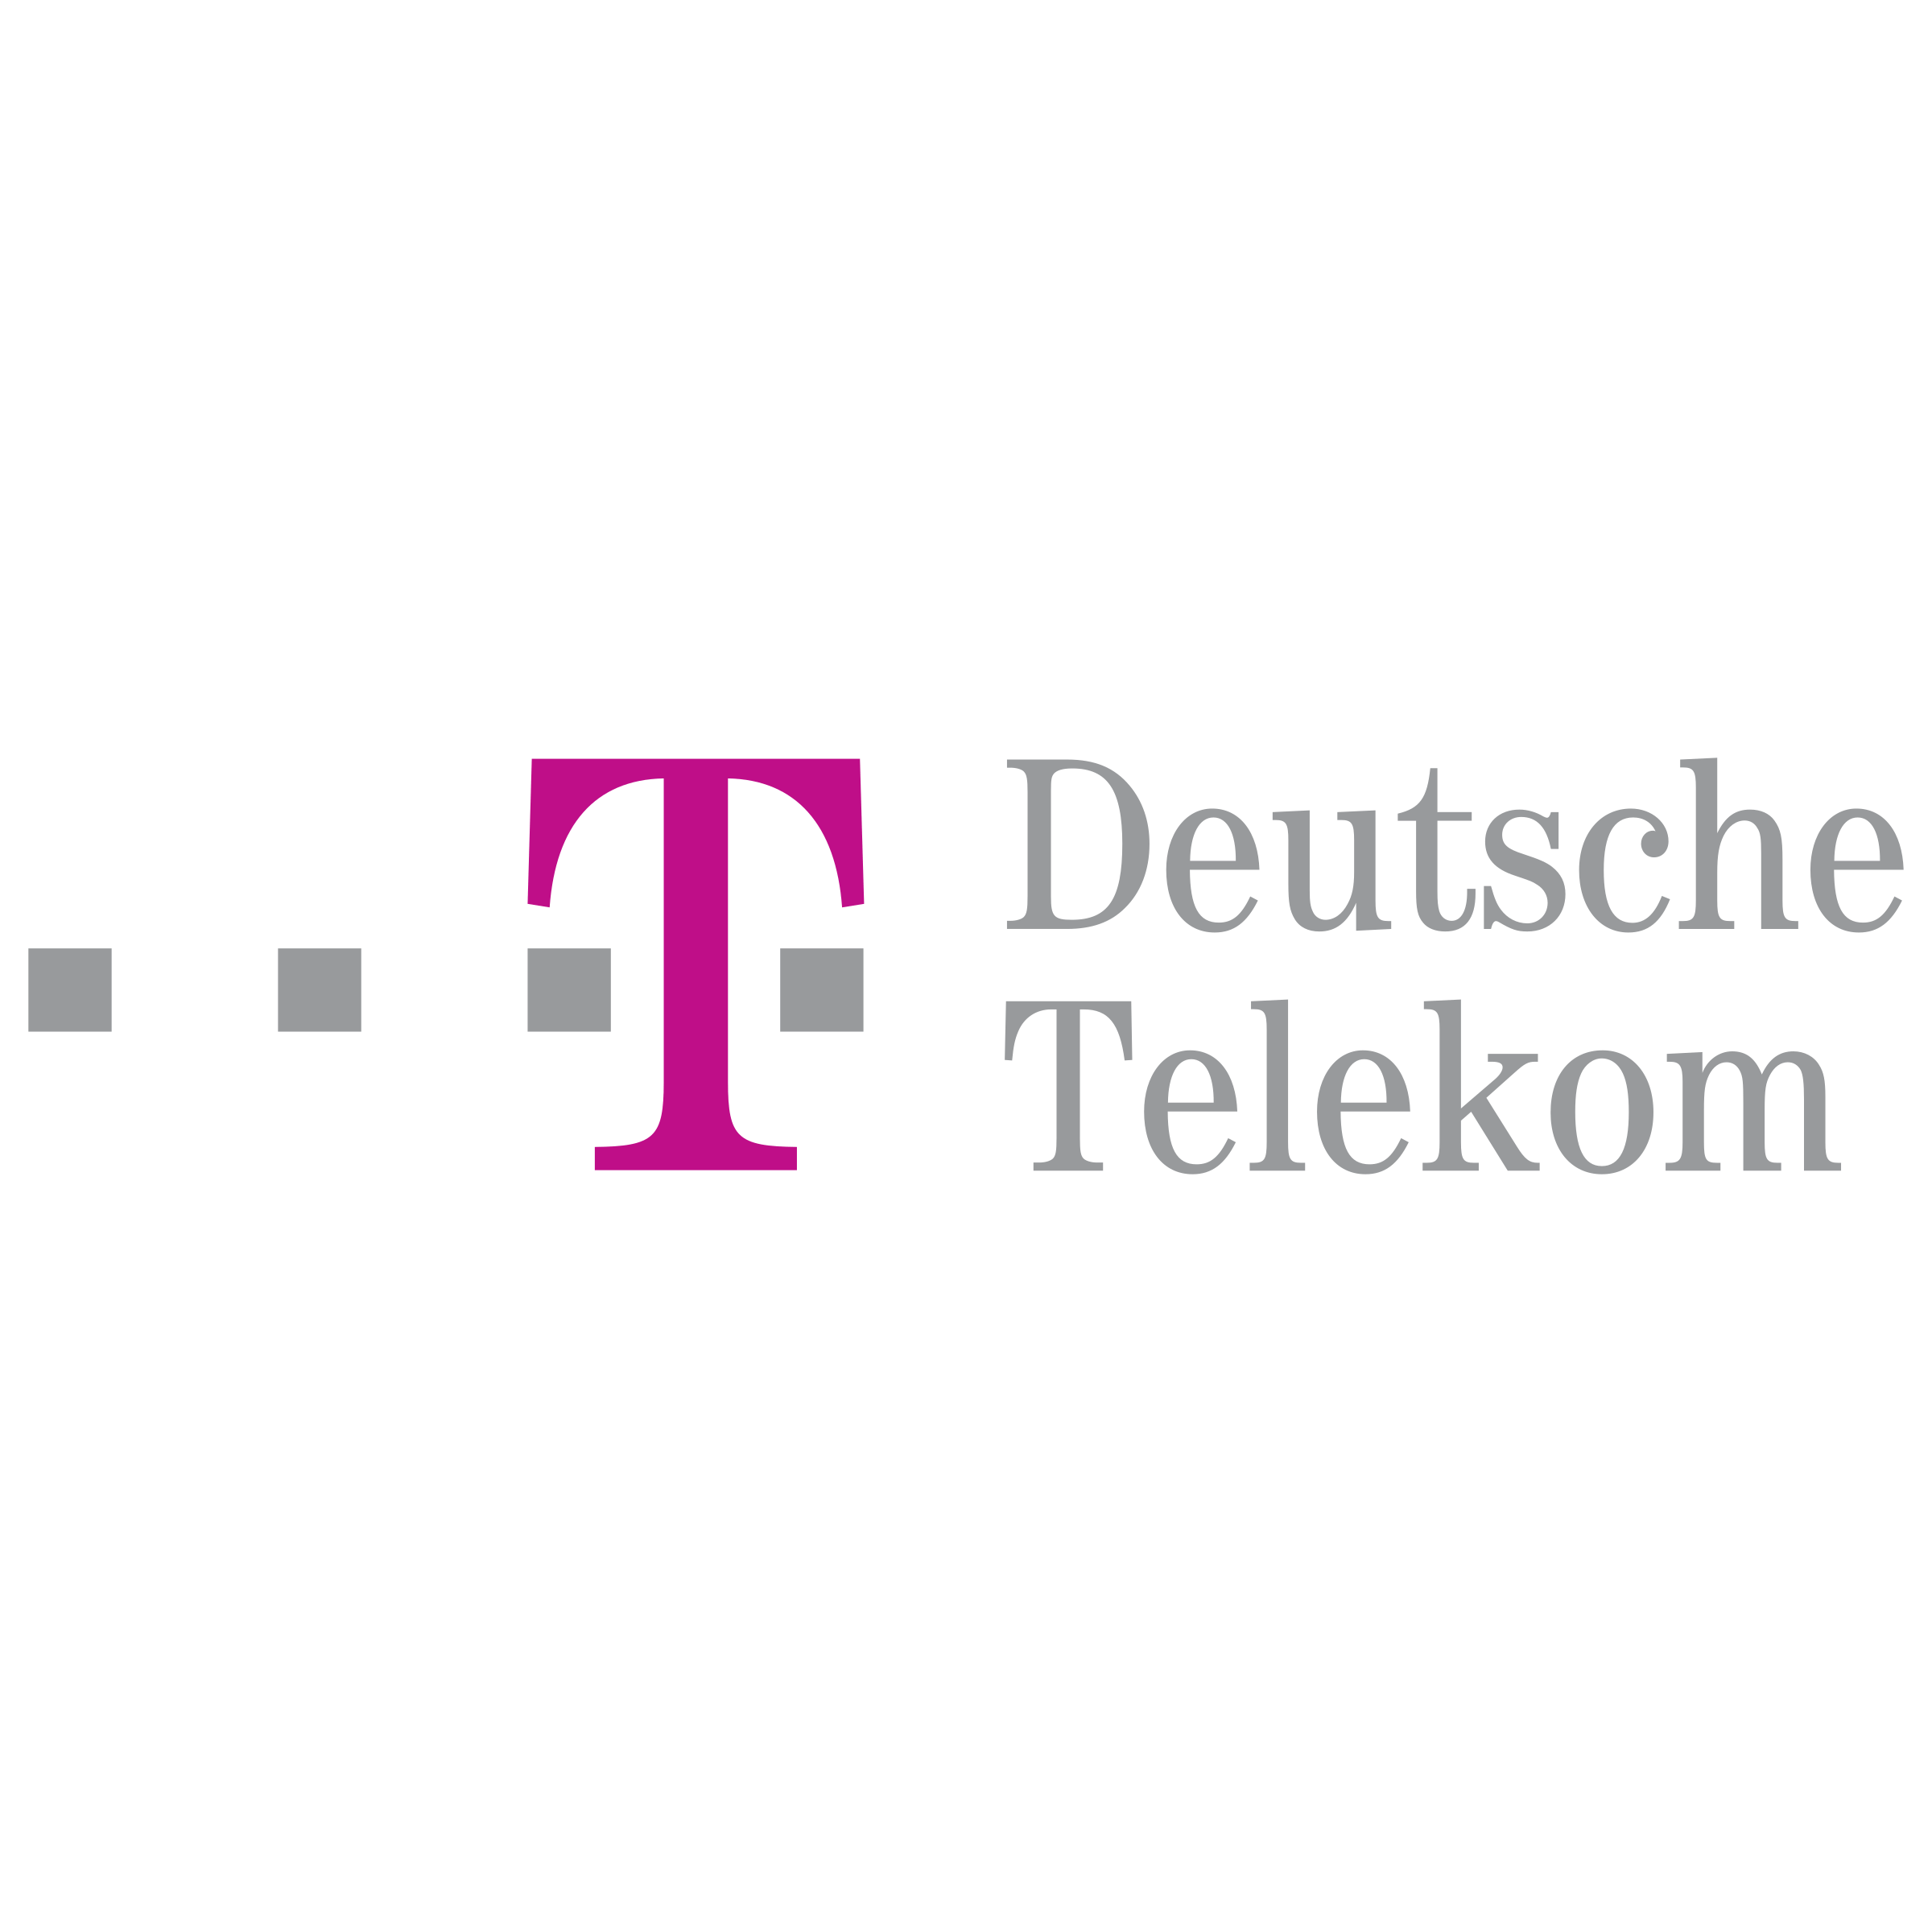 Deutsche Telekom Logo - Deutsche Telekom Logo PNG Transparent & SVG Vector